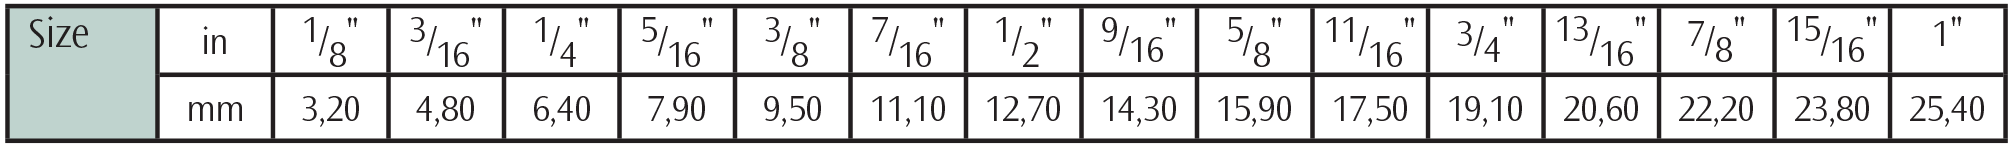 Datasheet 1575 1578 Table